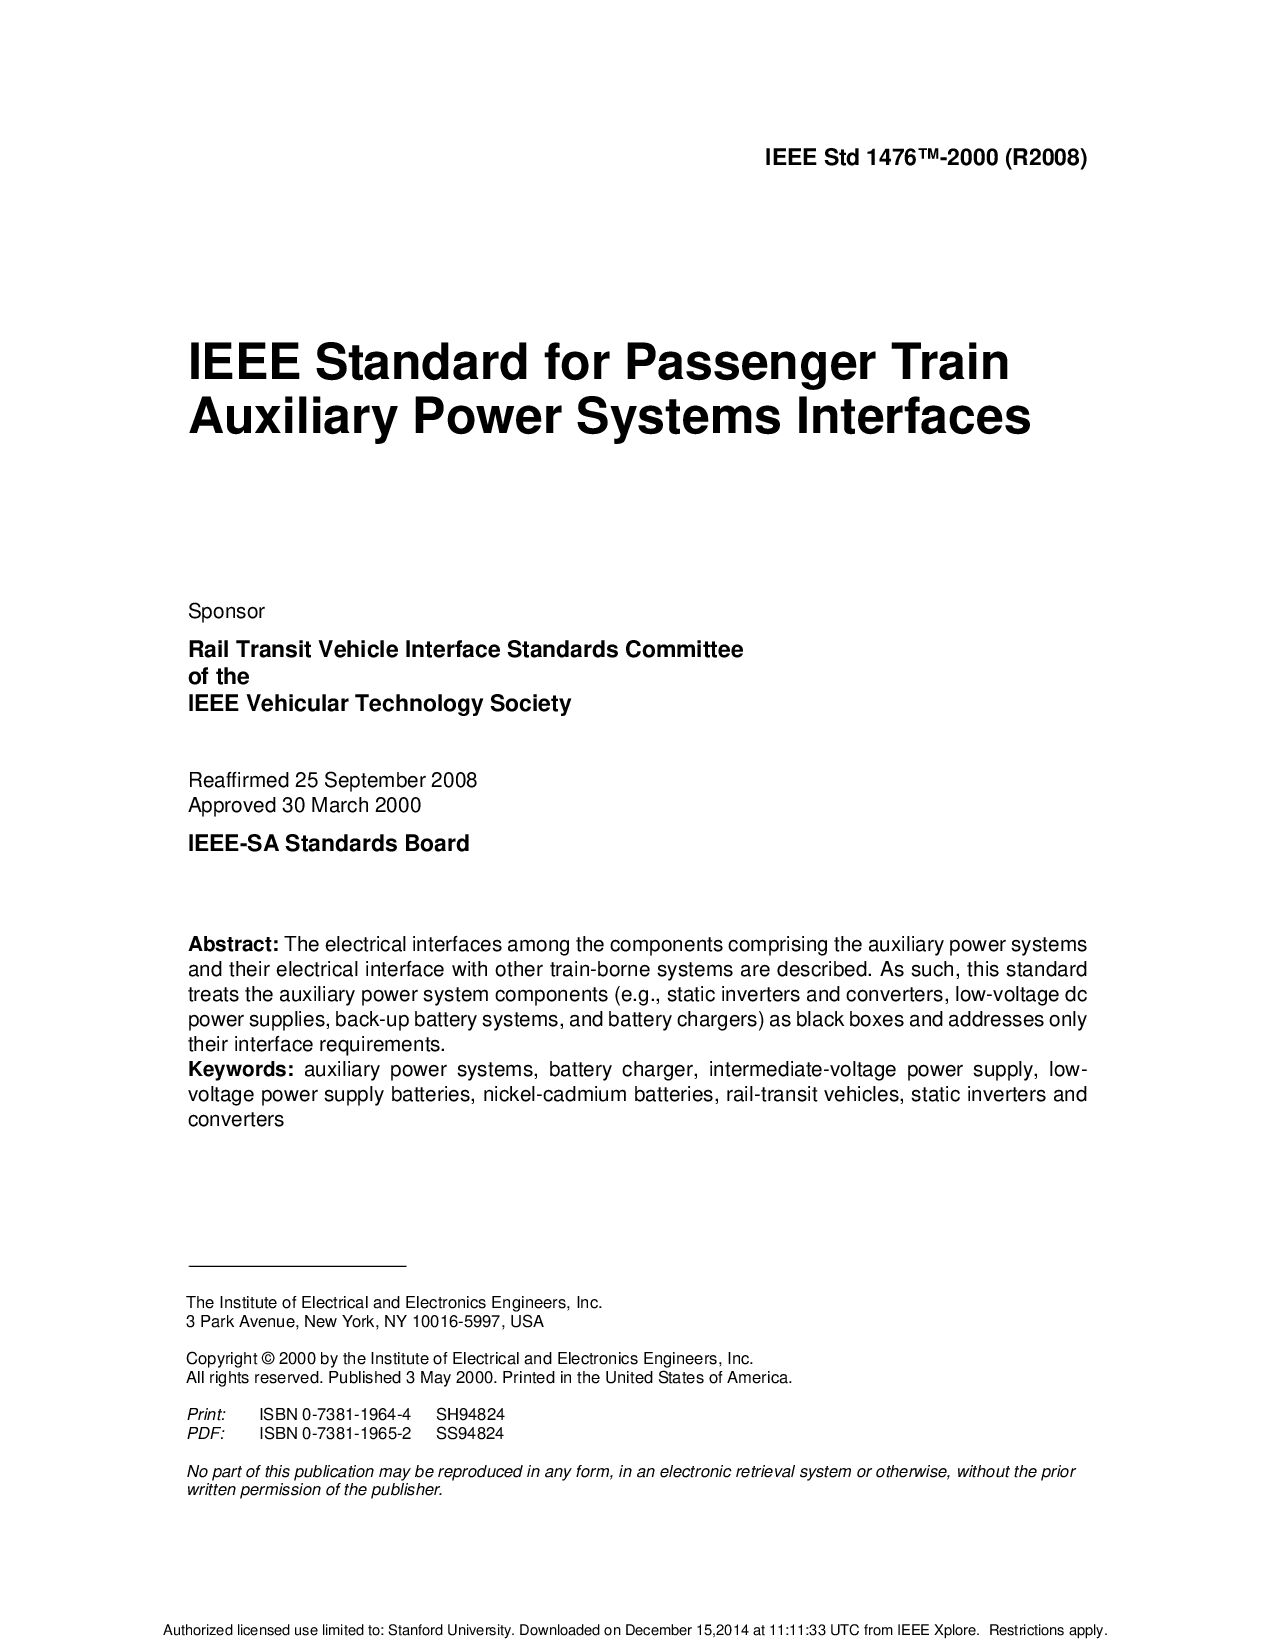 IEEE Std 1476-2000(R2008)封面图